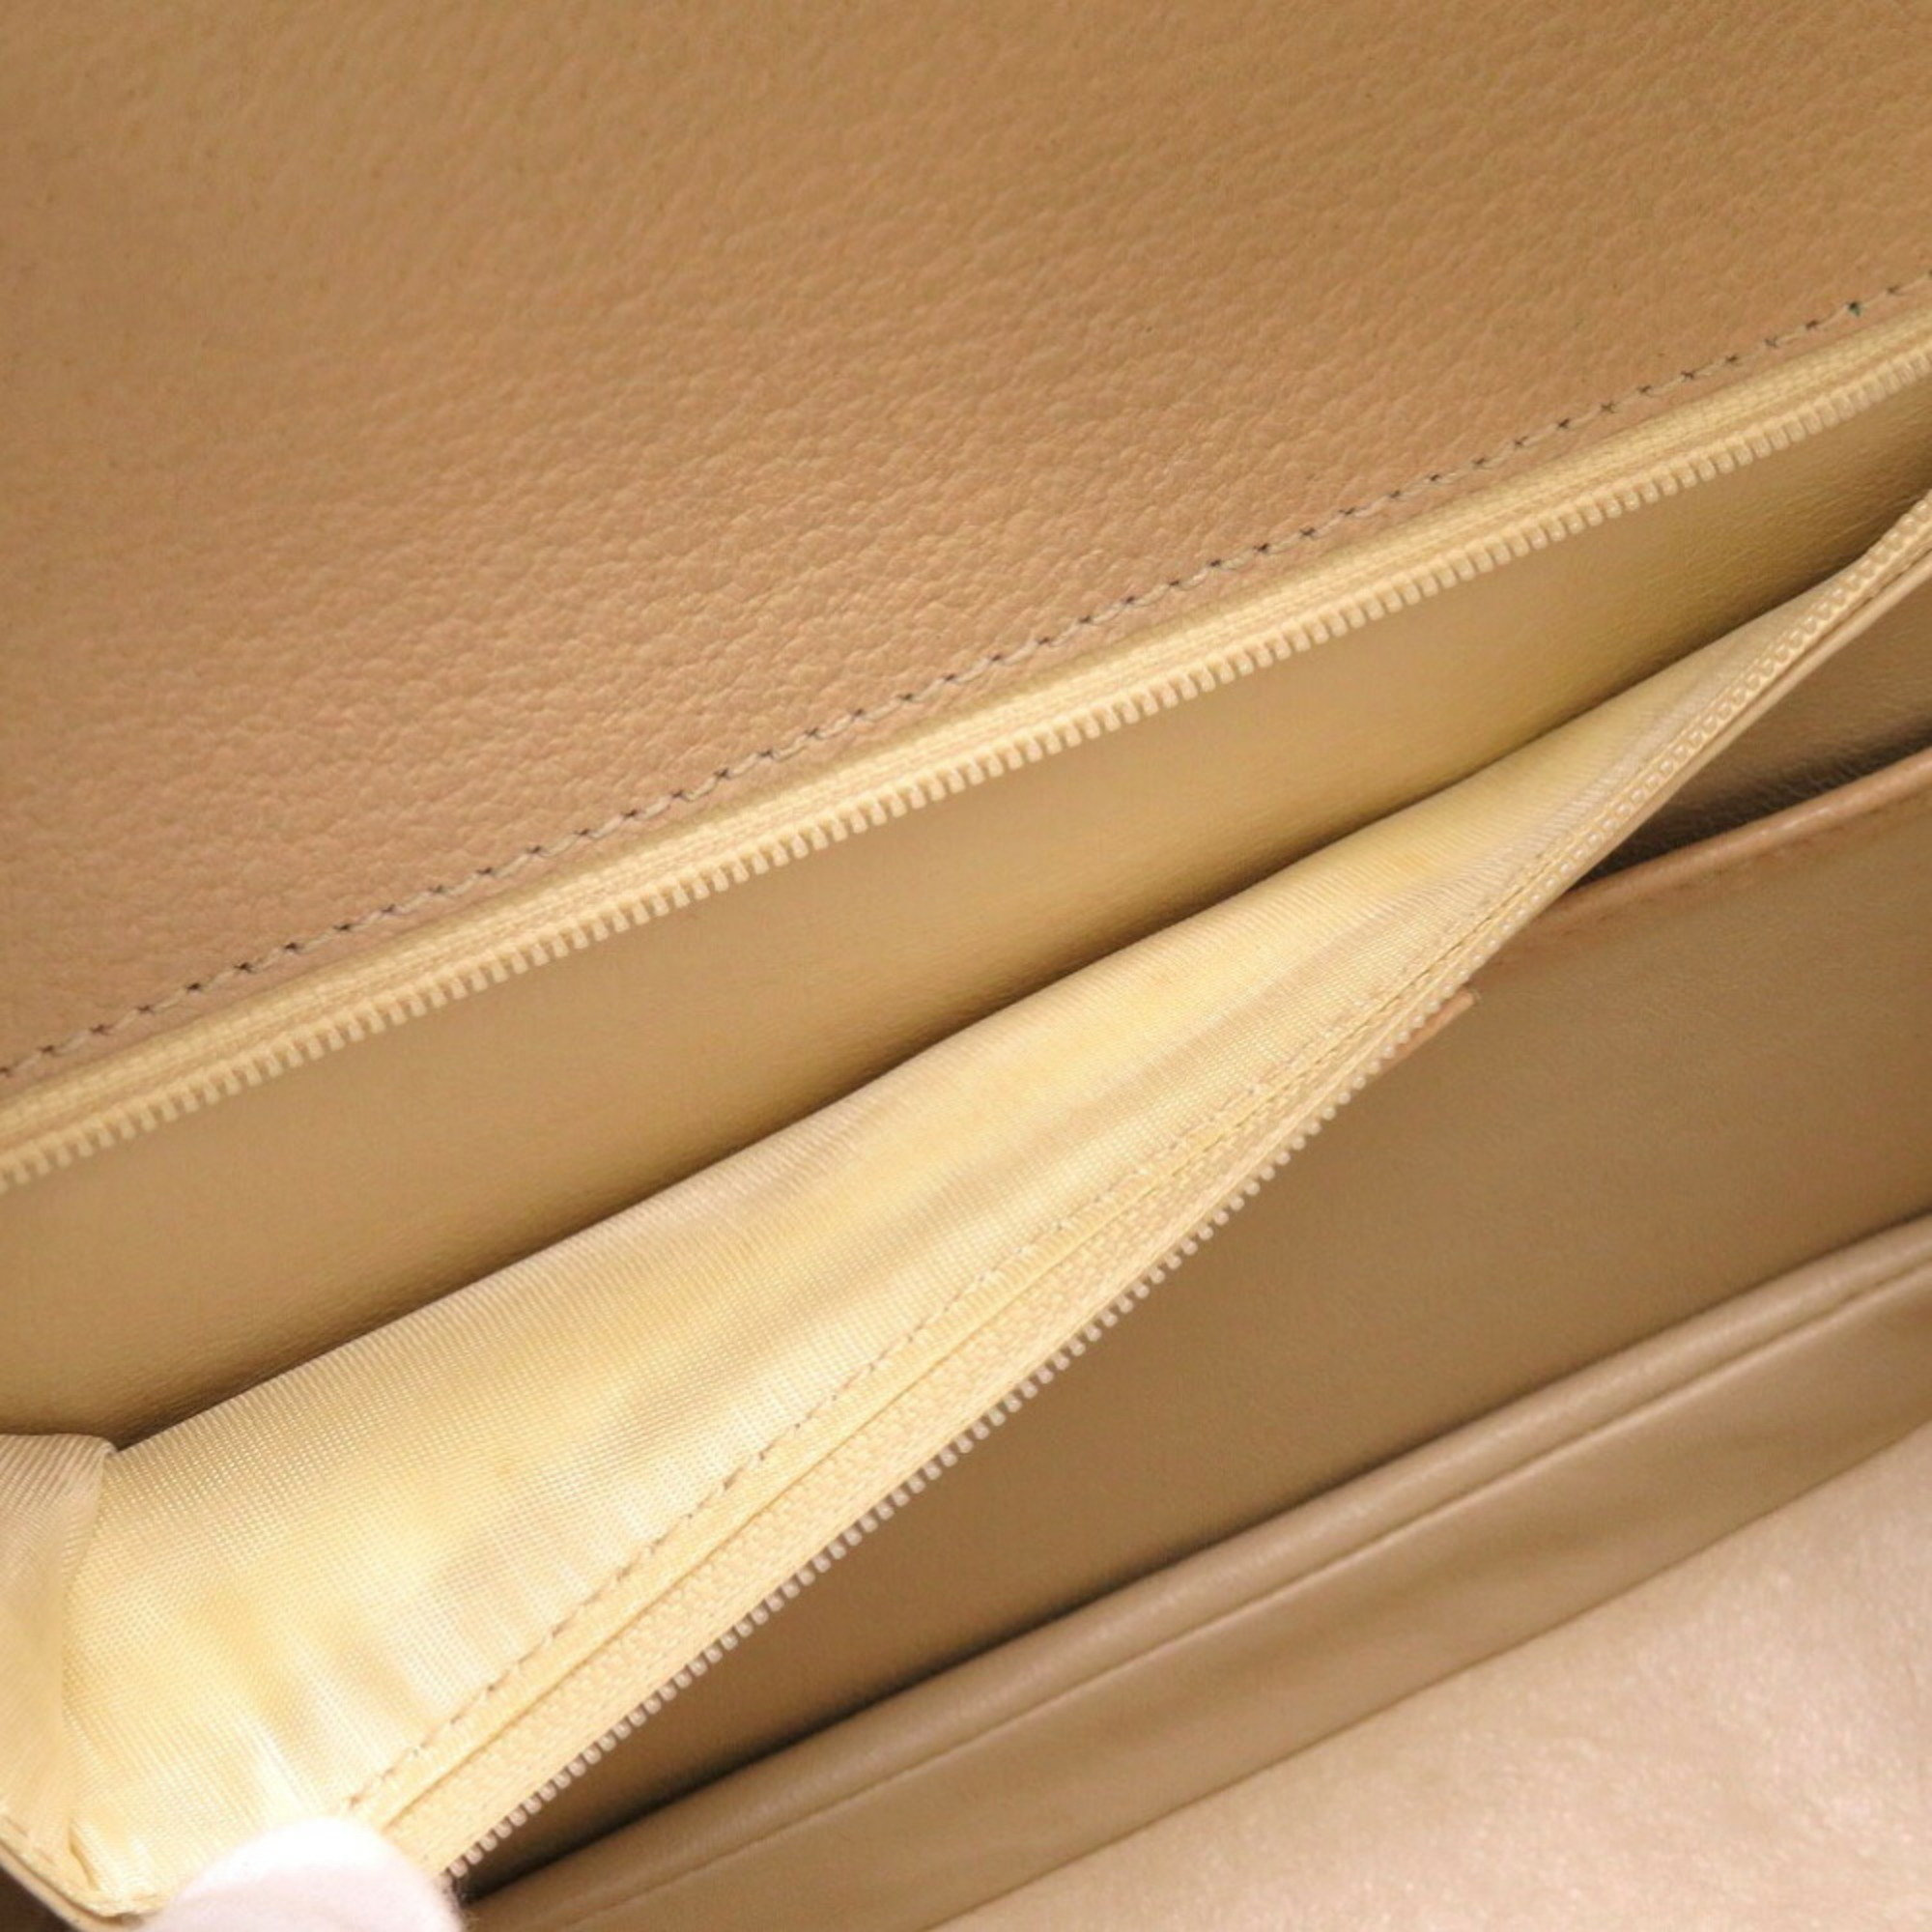 gucci bamboo leather beige handbag